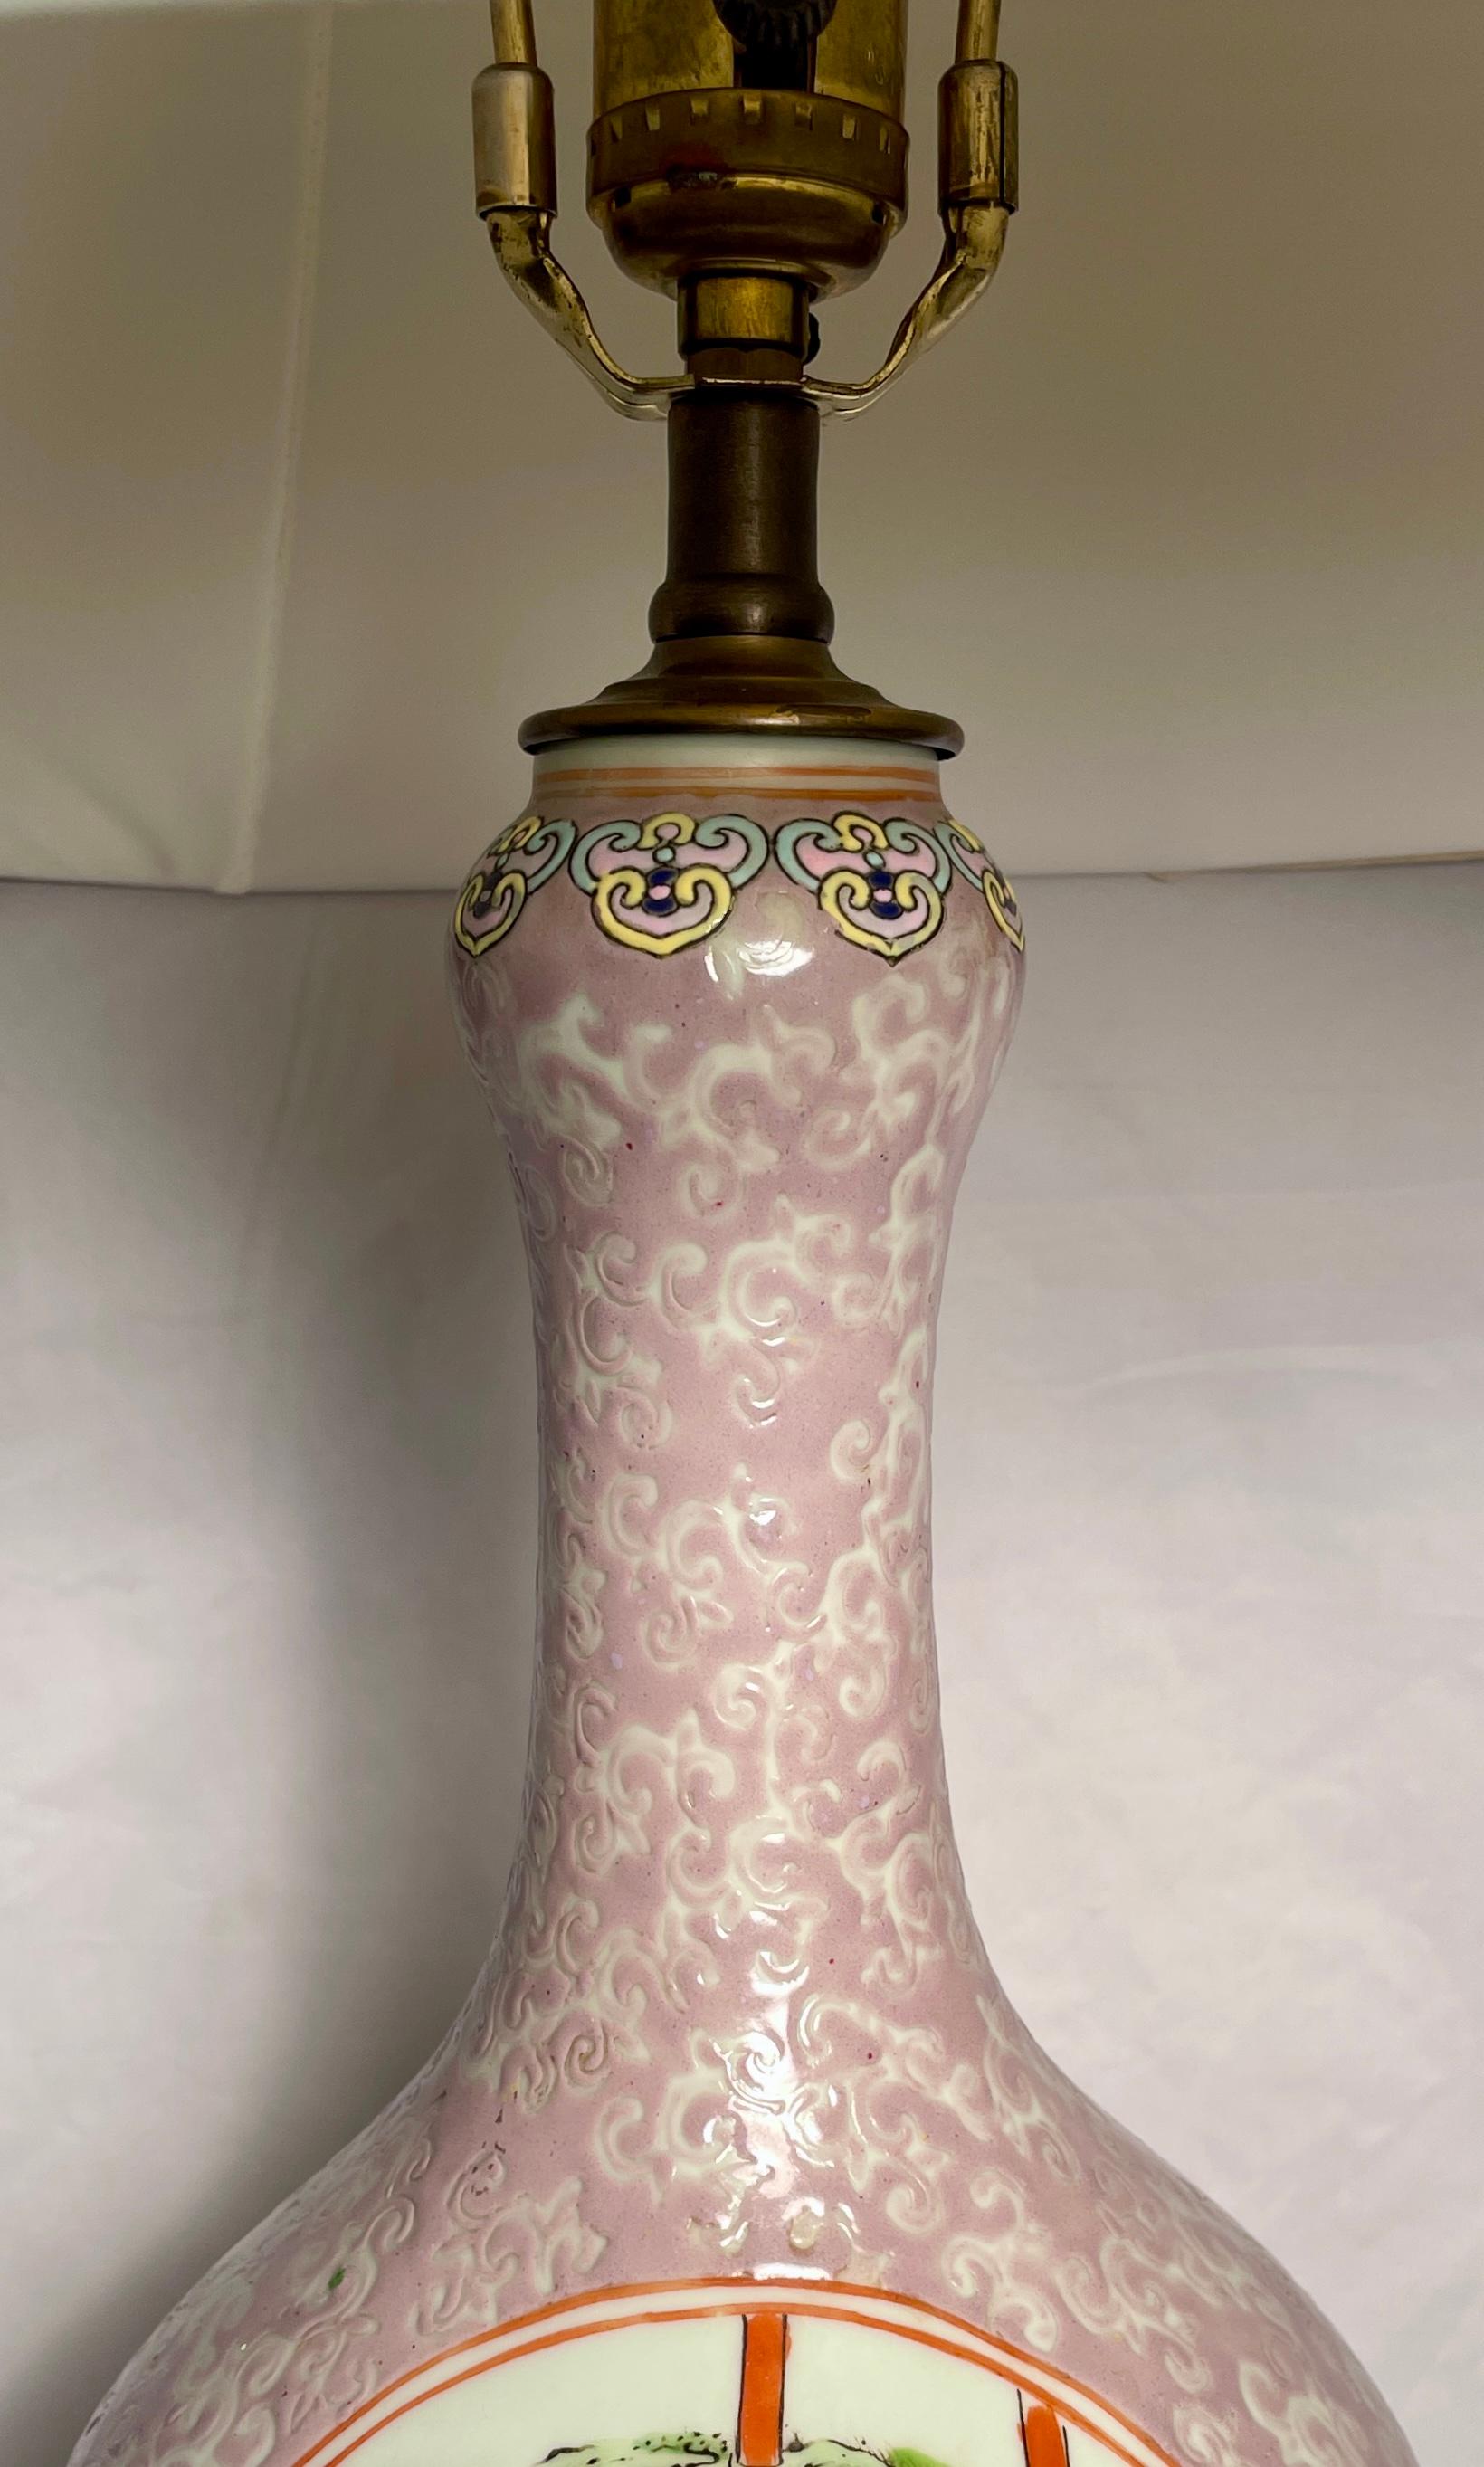 Pair Antique 19th Century Chinese Porcelain Bottle Vase Lamps w/ Mandarin Panels For Sale 1